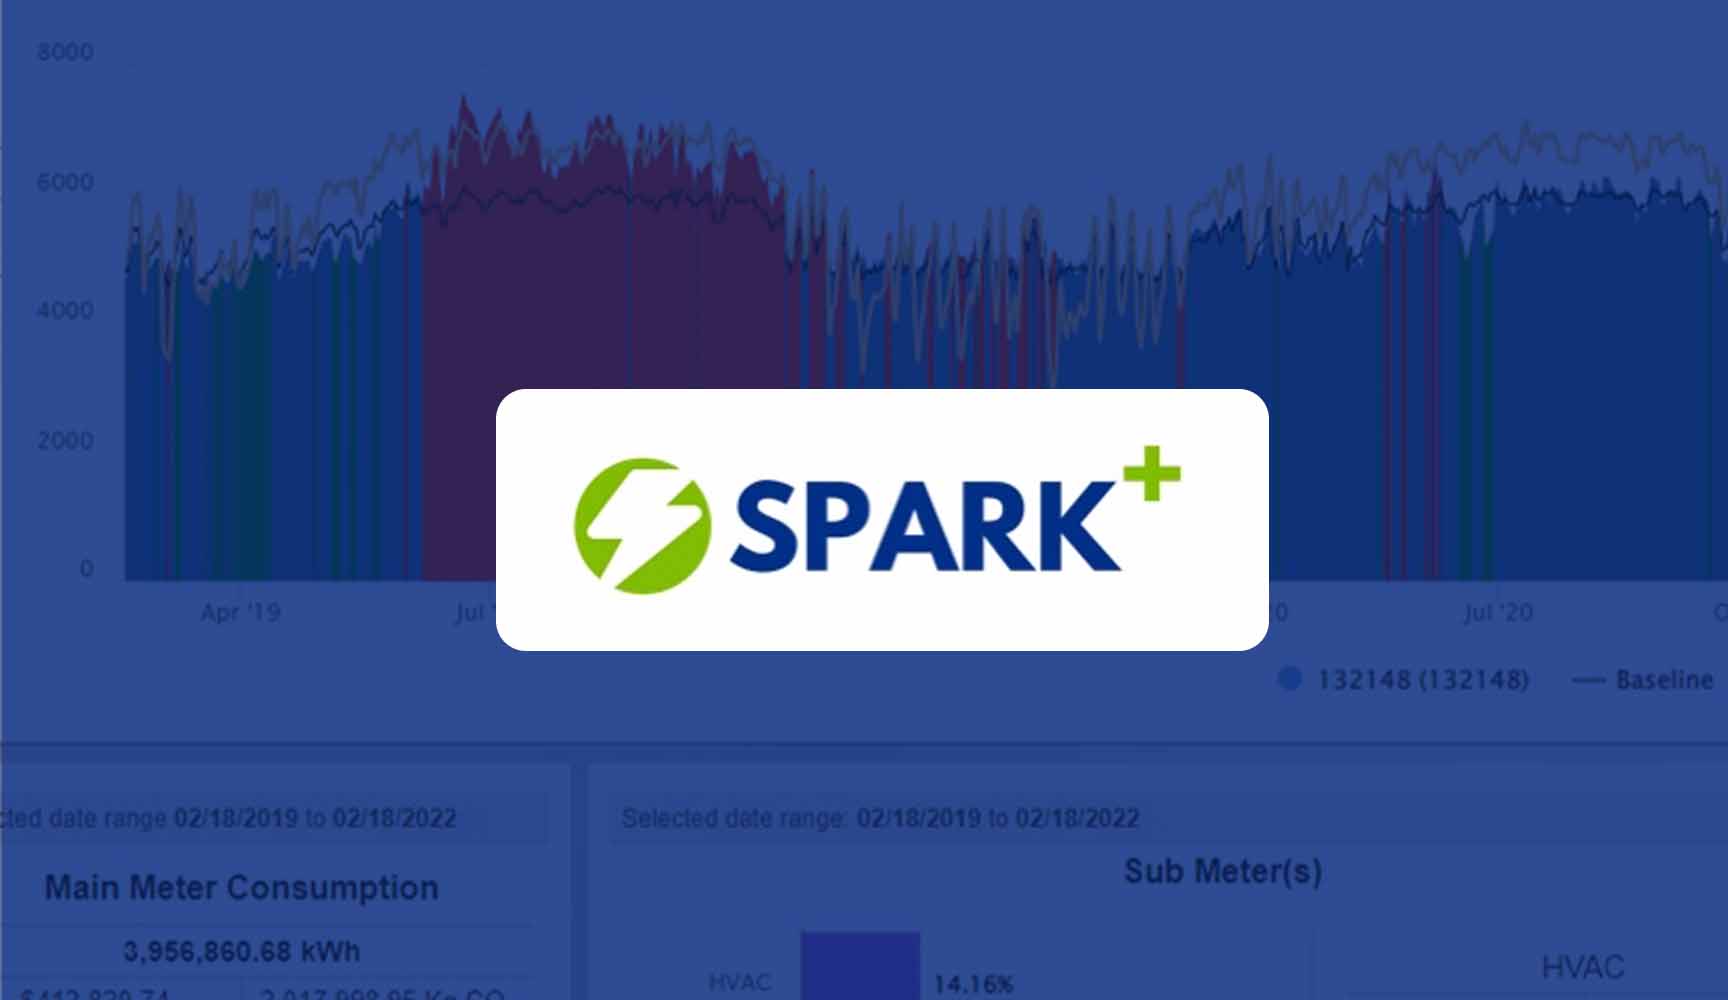 Spark + remote monitoring